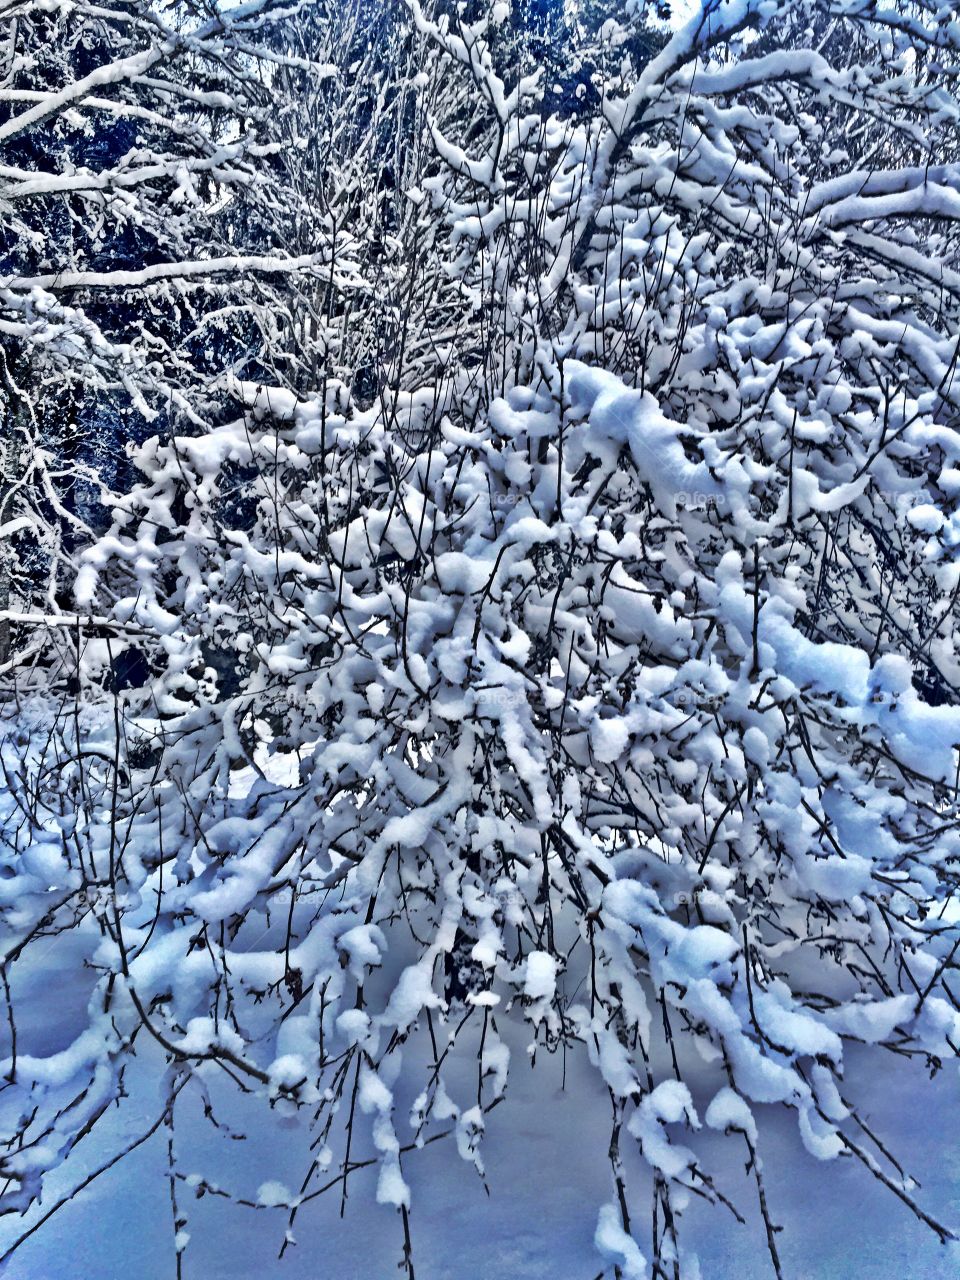 Snowy tree
Winter 